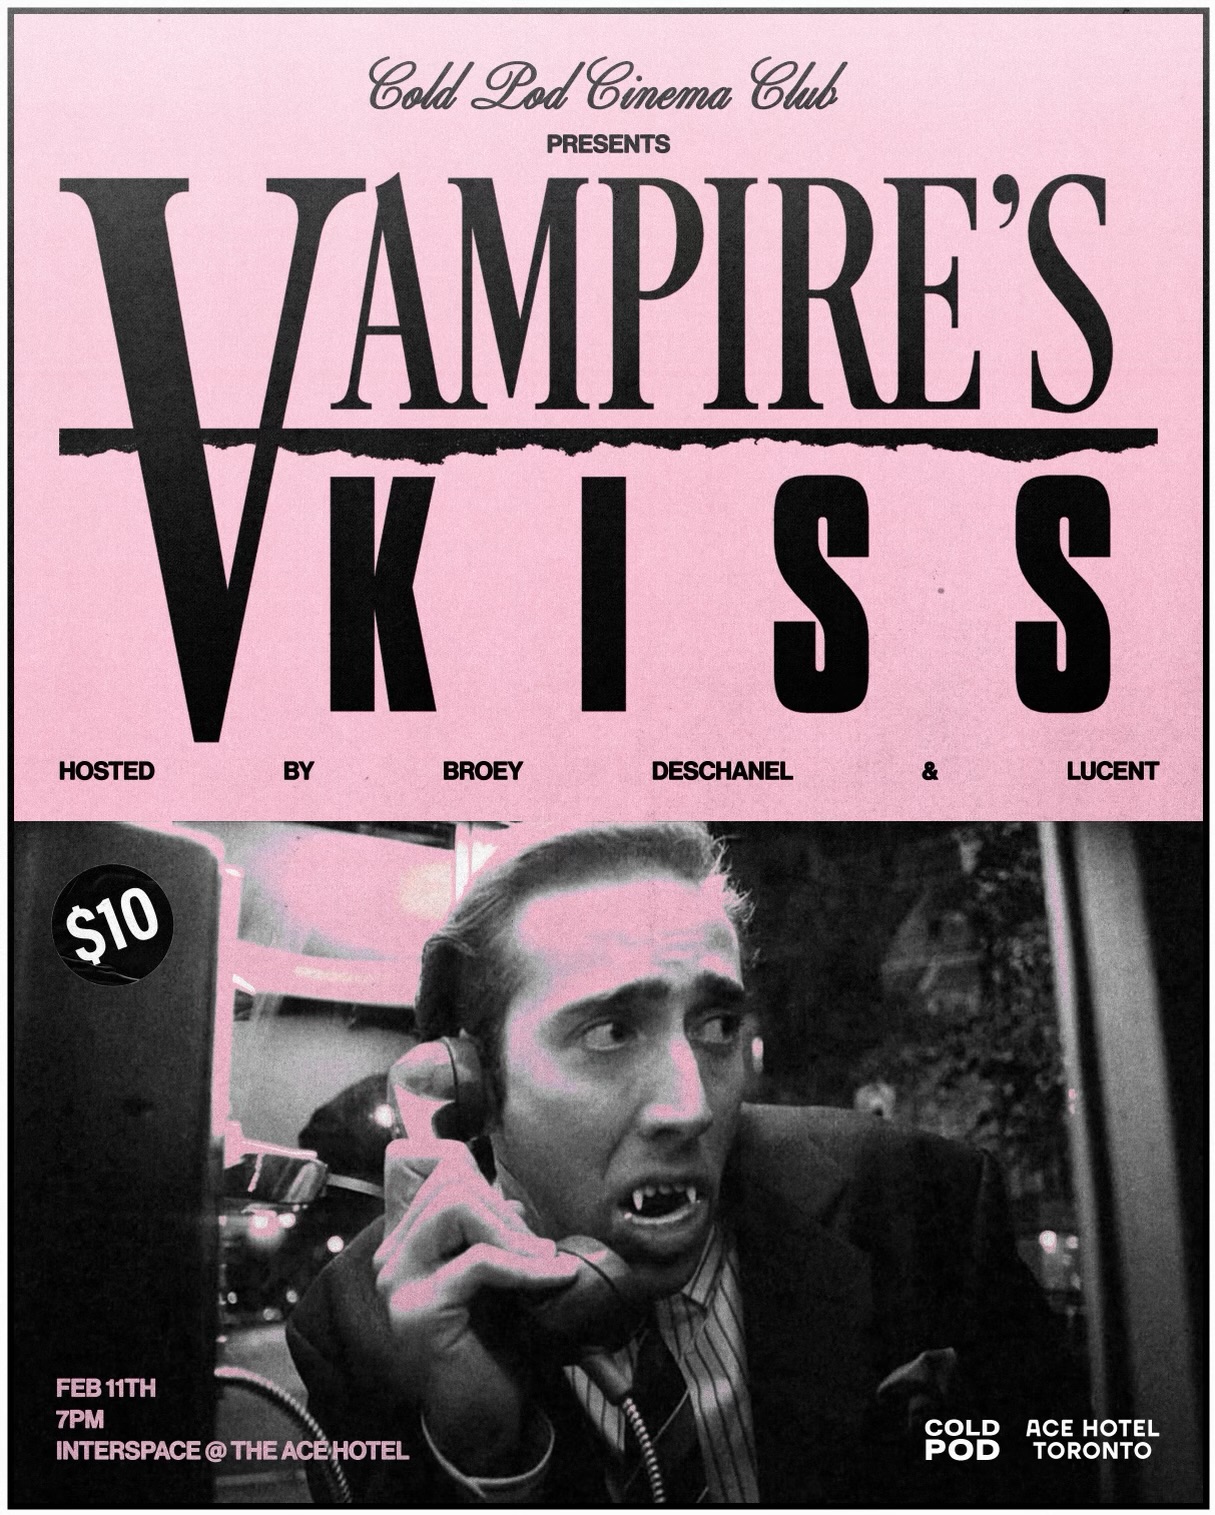 Cold Pod Cinema Club Presents Vampire Kiss promo